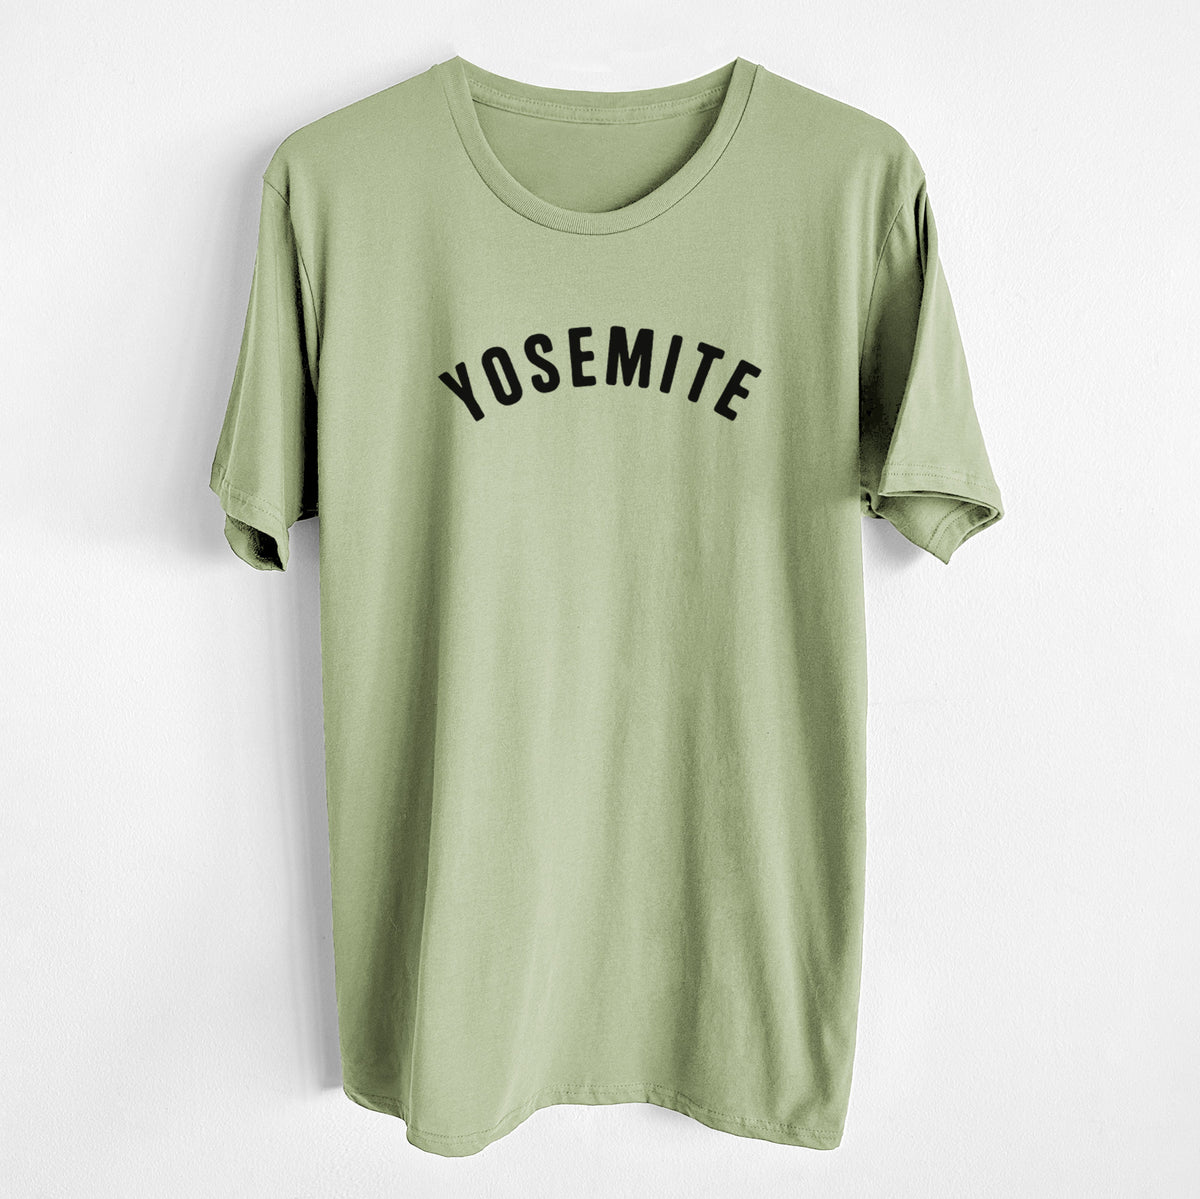 Yosemite - Unisex Crewneck - Made in USA - 100% Organic Cotton